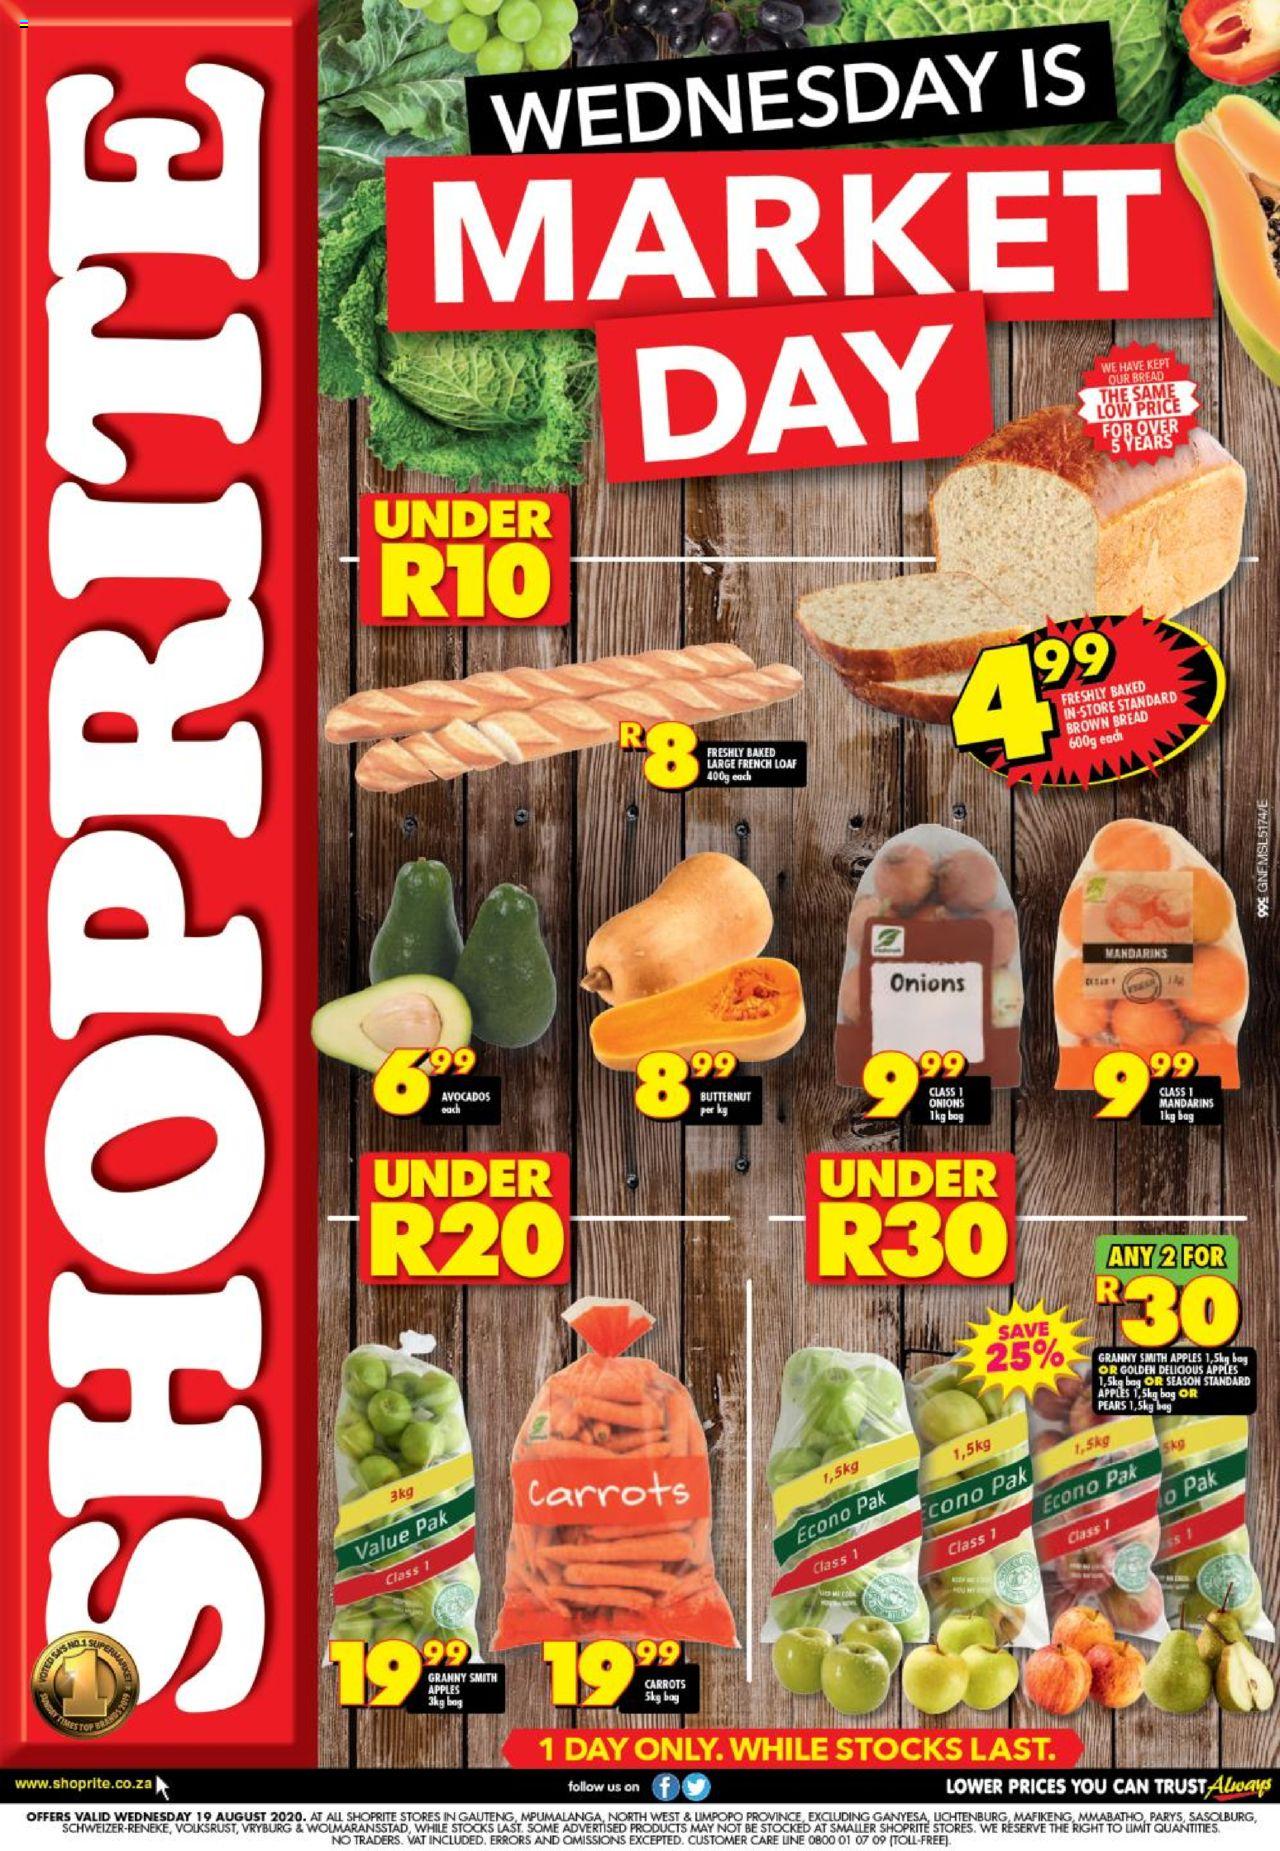 Shoprite Specials Wednesday Is Market Day 19 August 2020